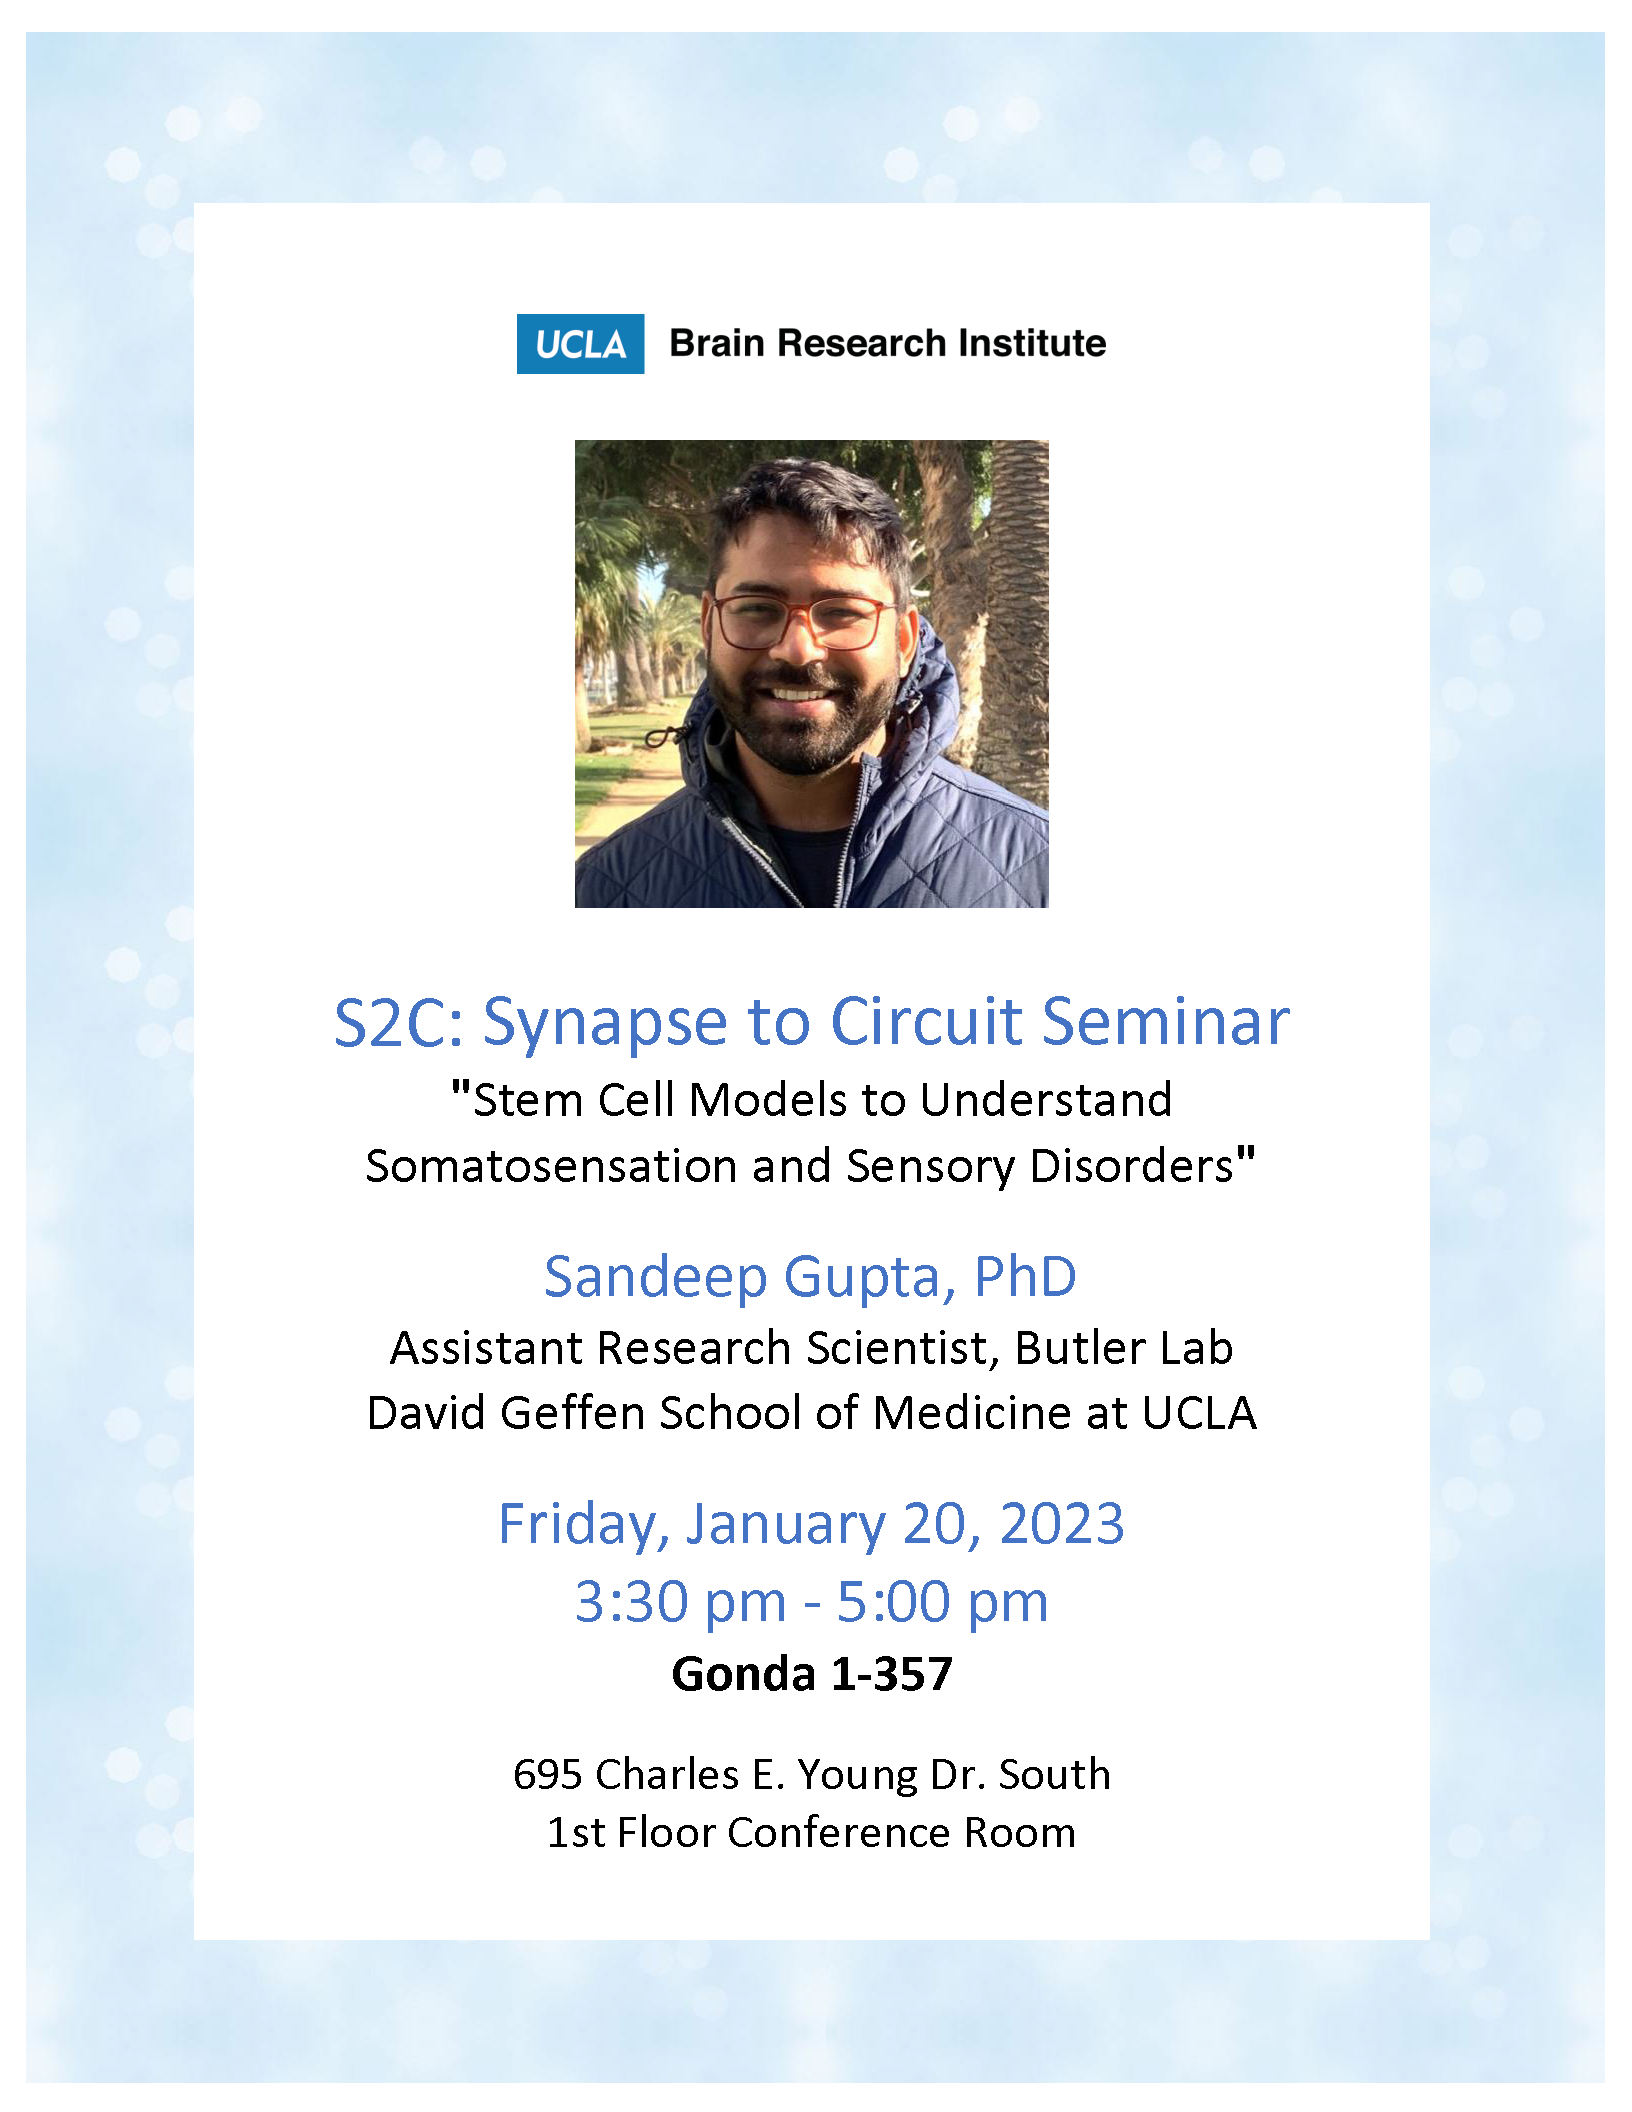 Sandeep gives Synapse to Circuit seminar